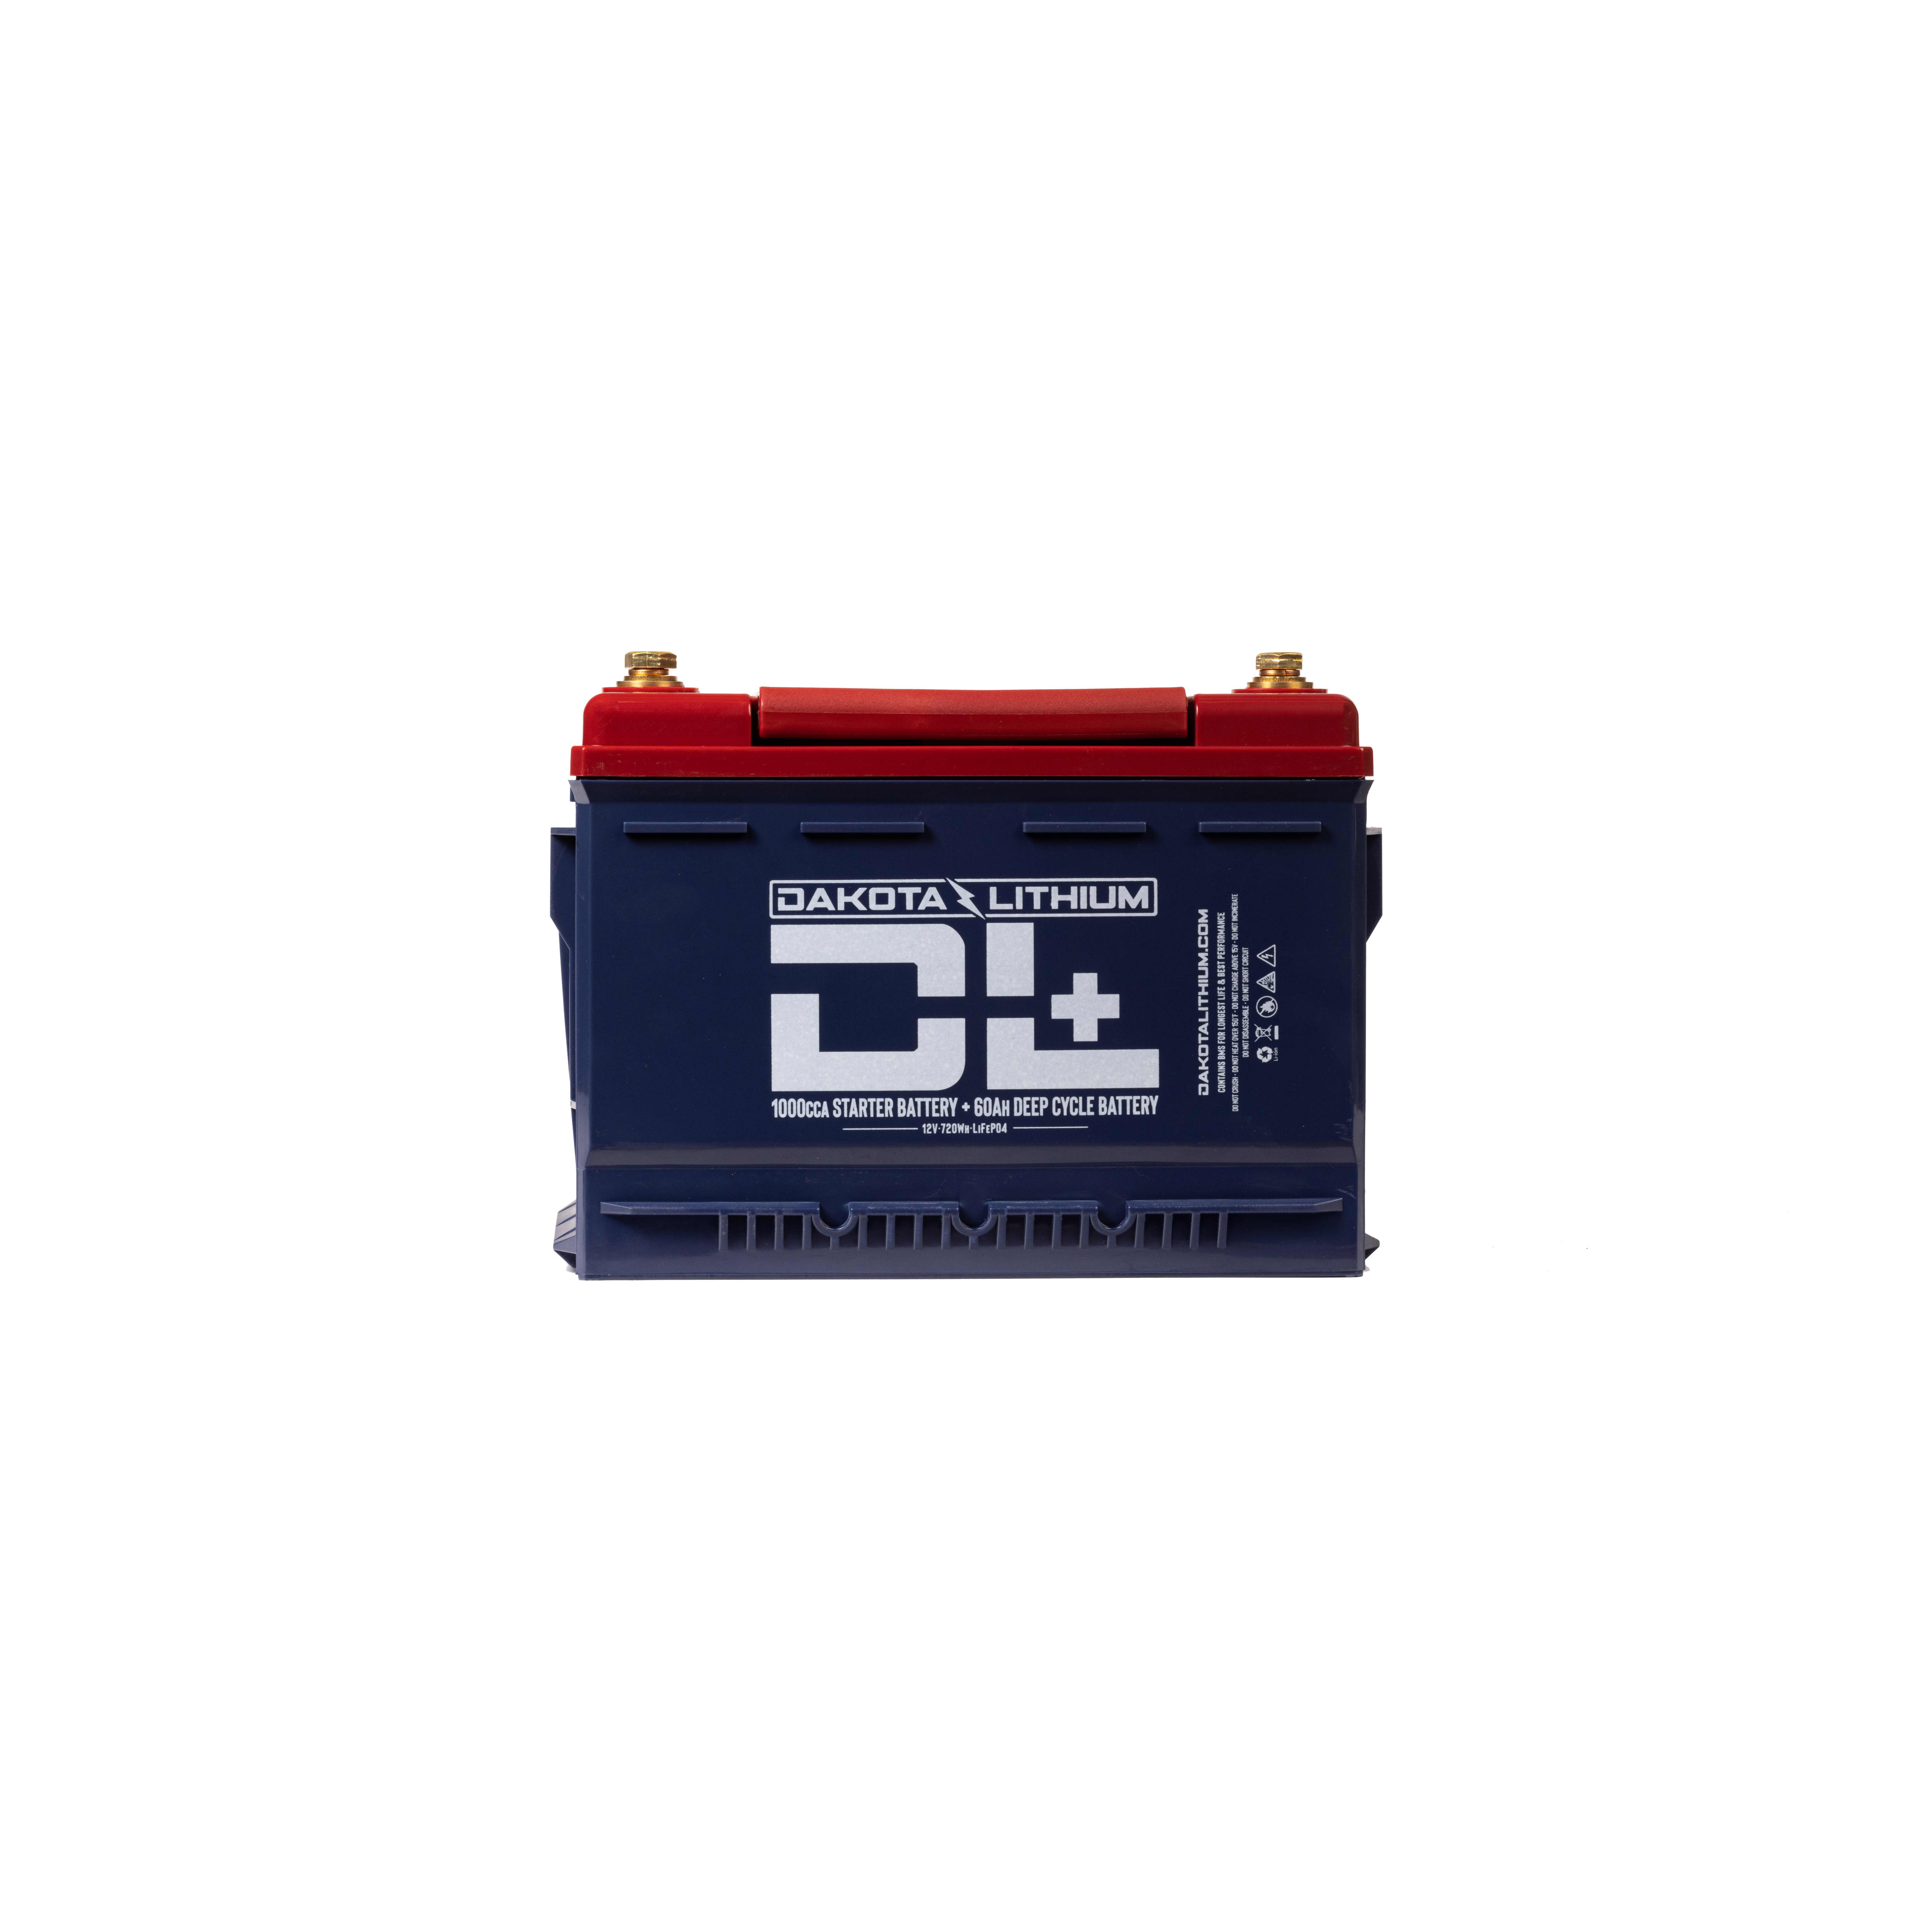 Dakota Lithium Dual Purpose 12V 60AH Battery and Charger